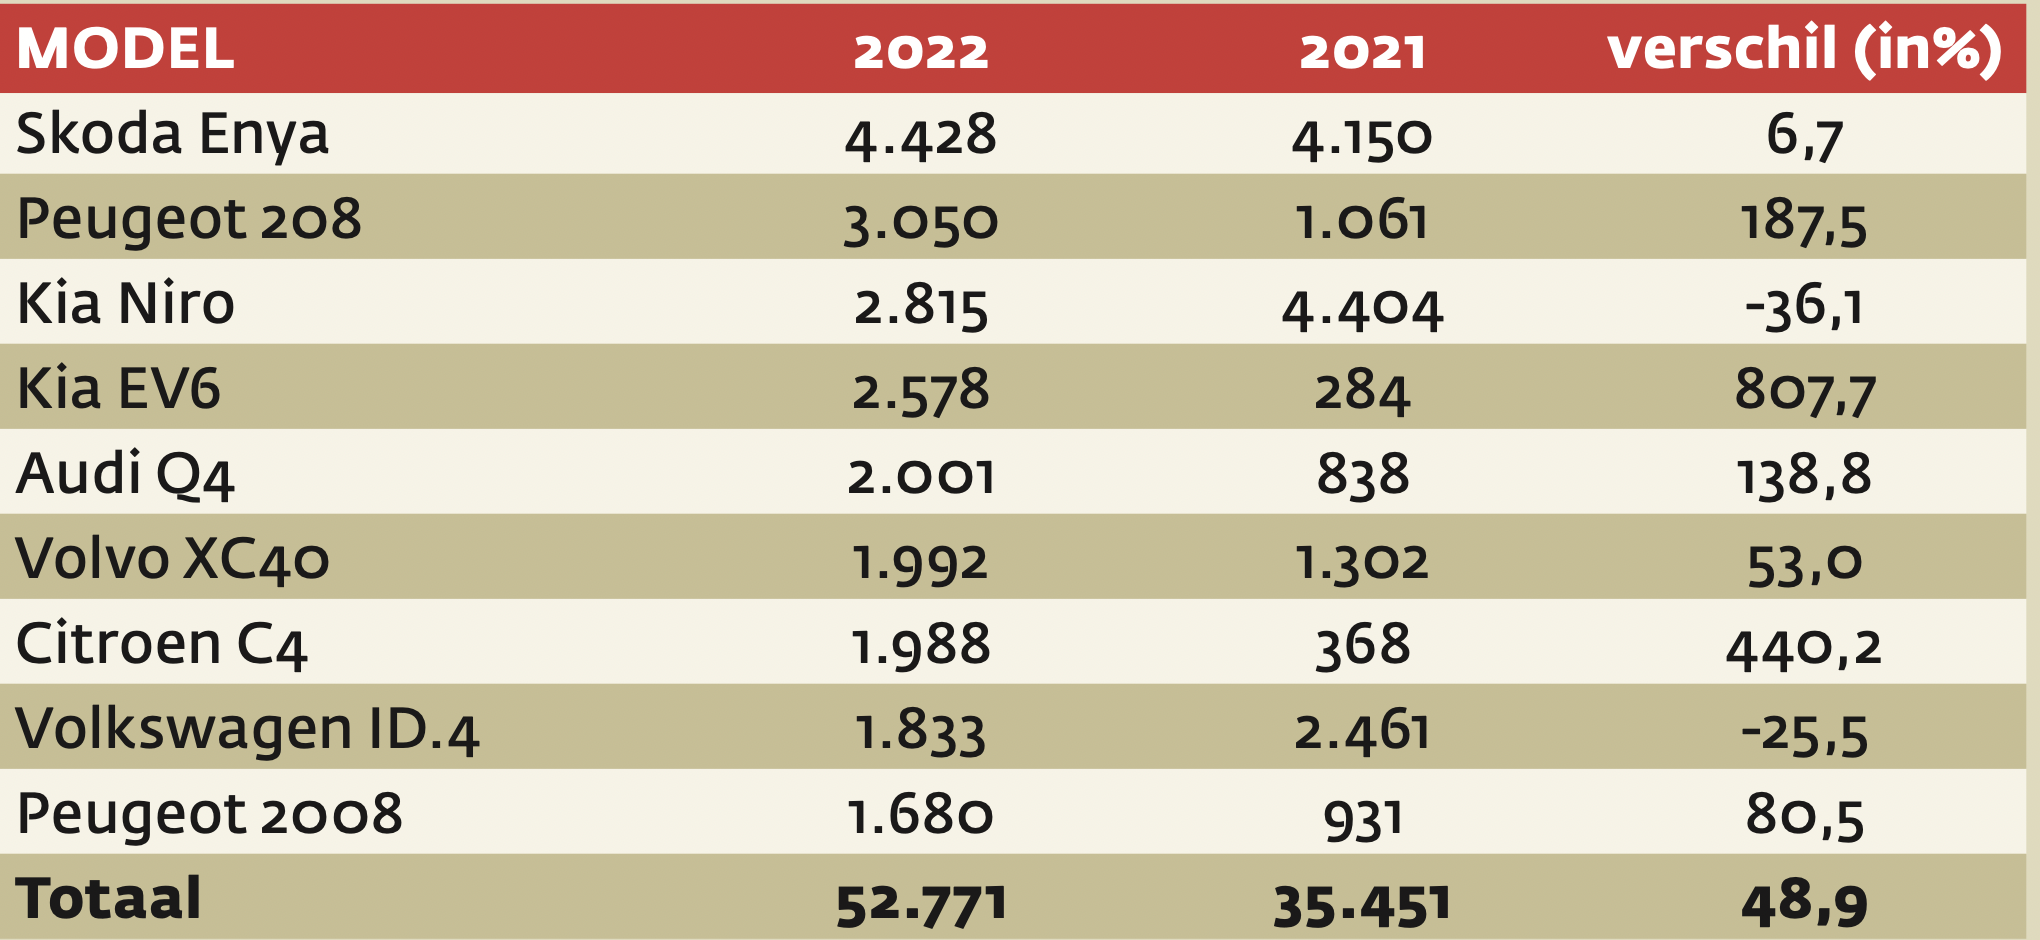 tabel kennisbank 2022 amm